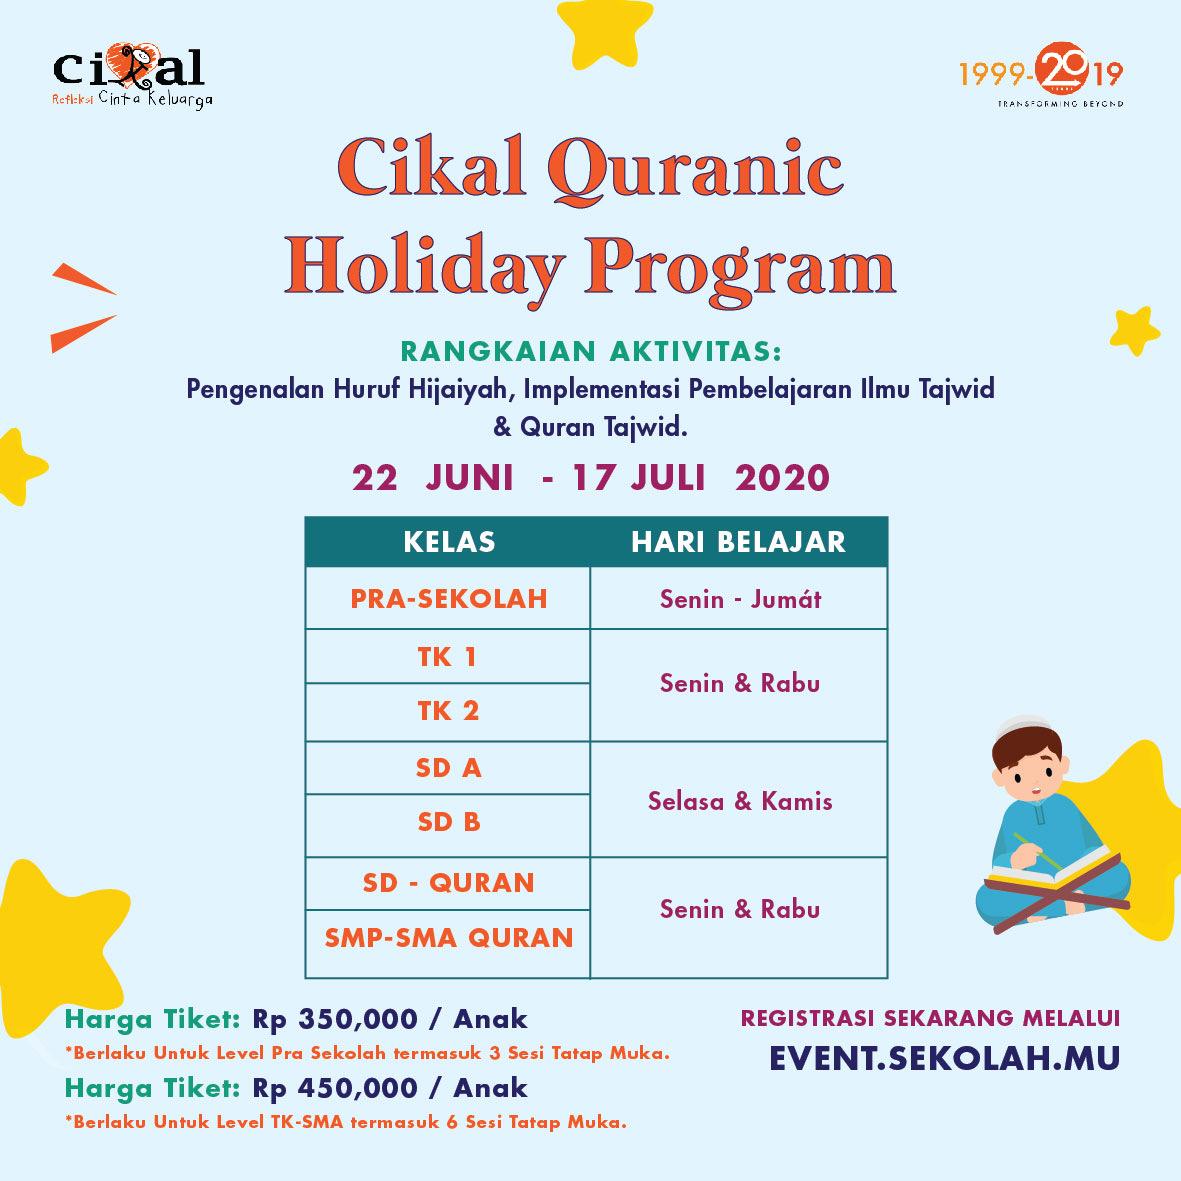 Cikal Quranic Holiday Program 